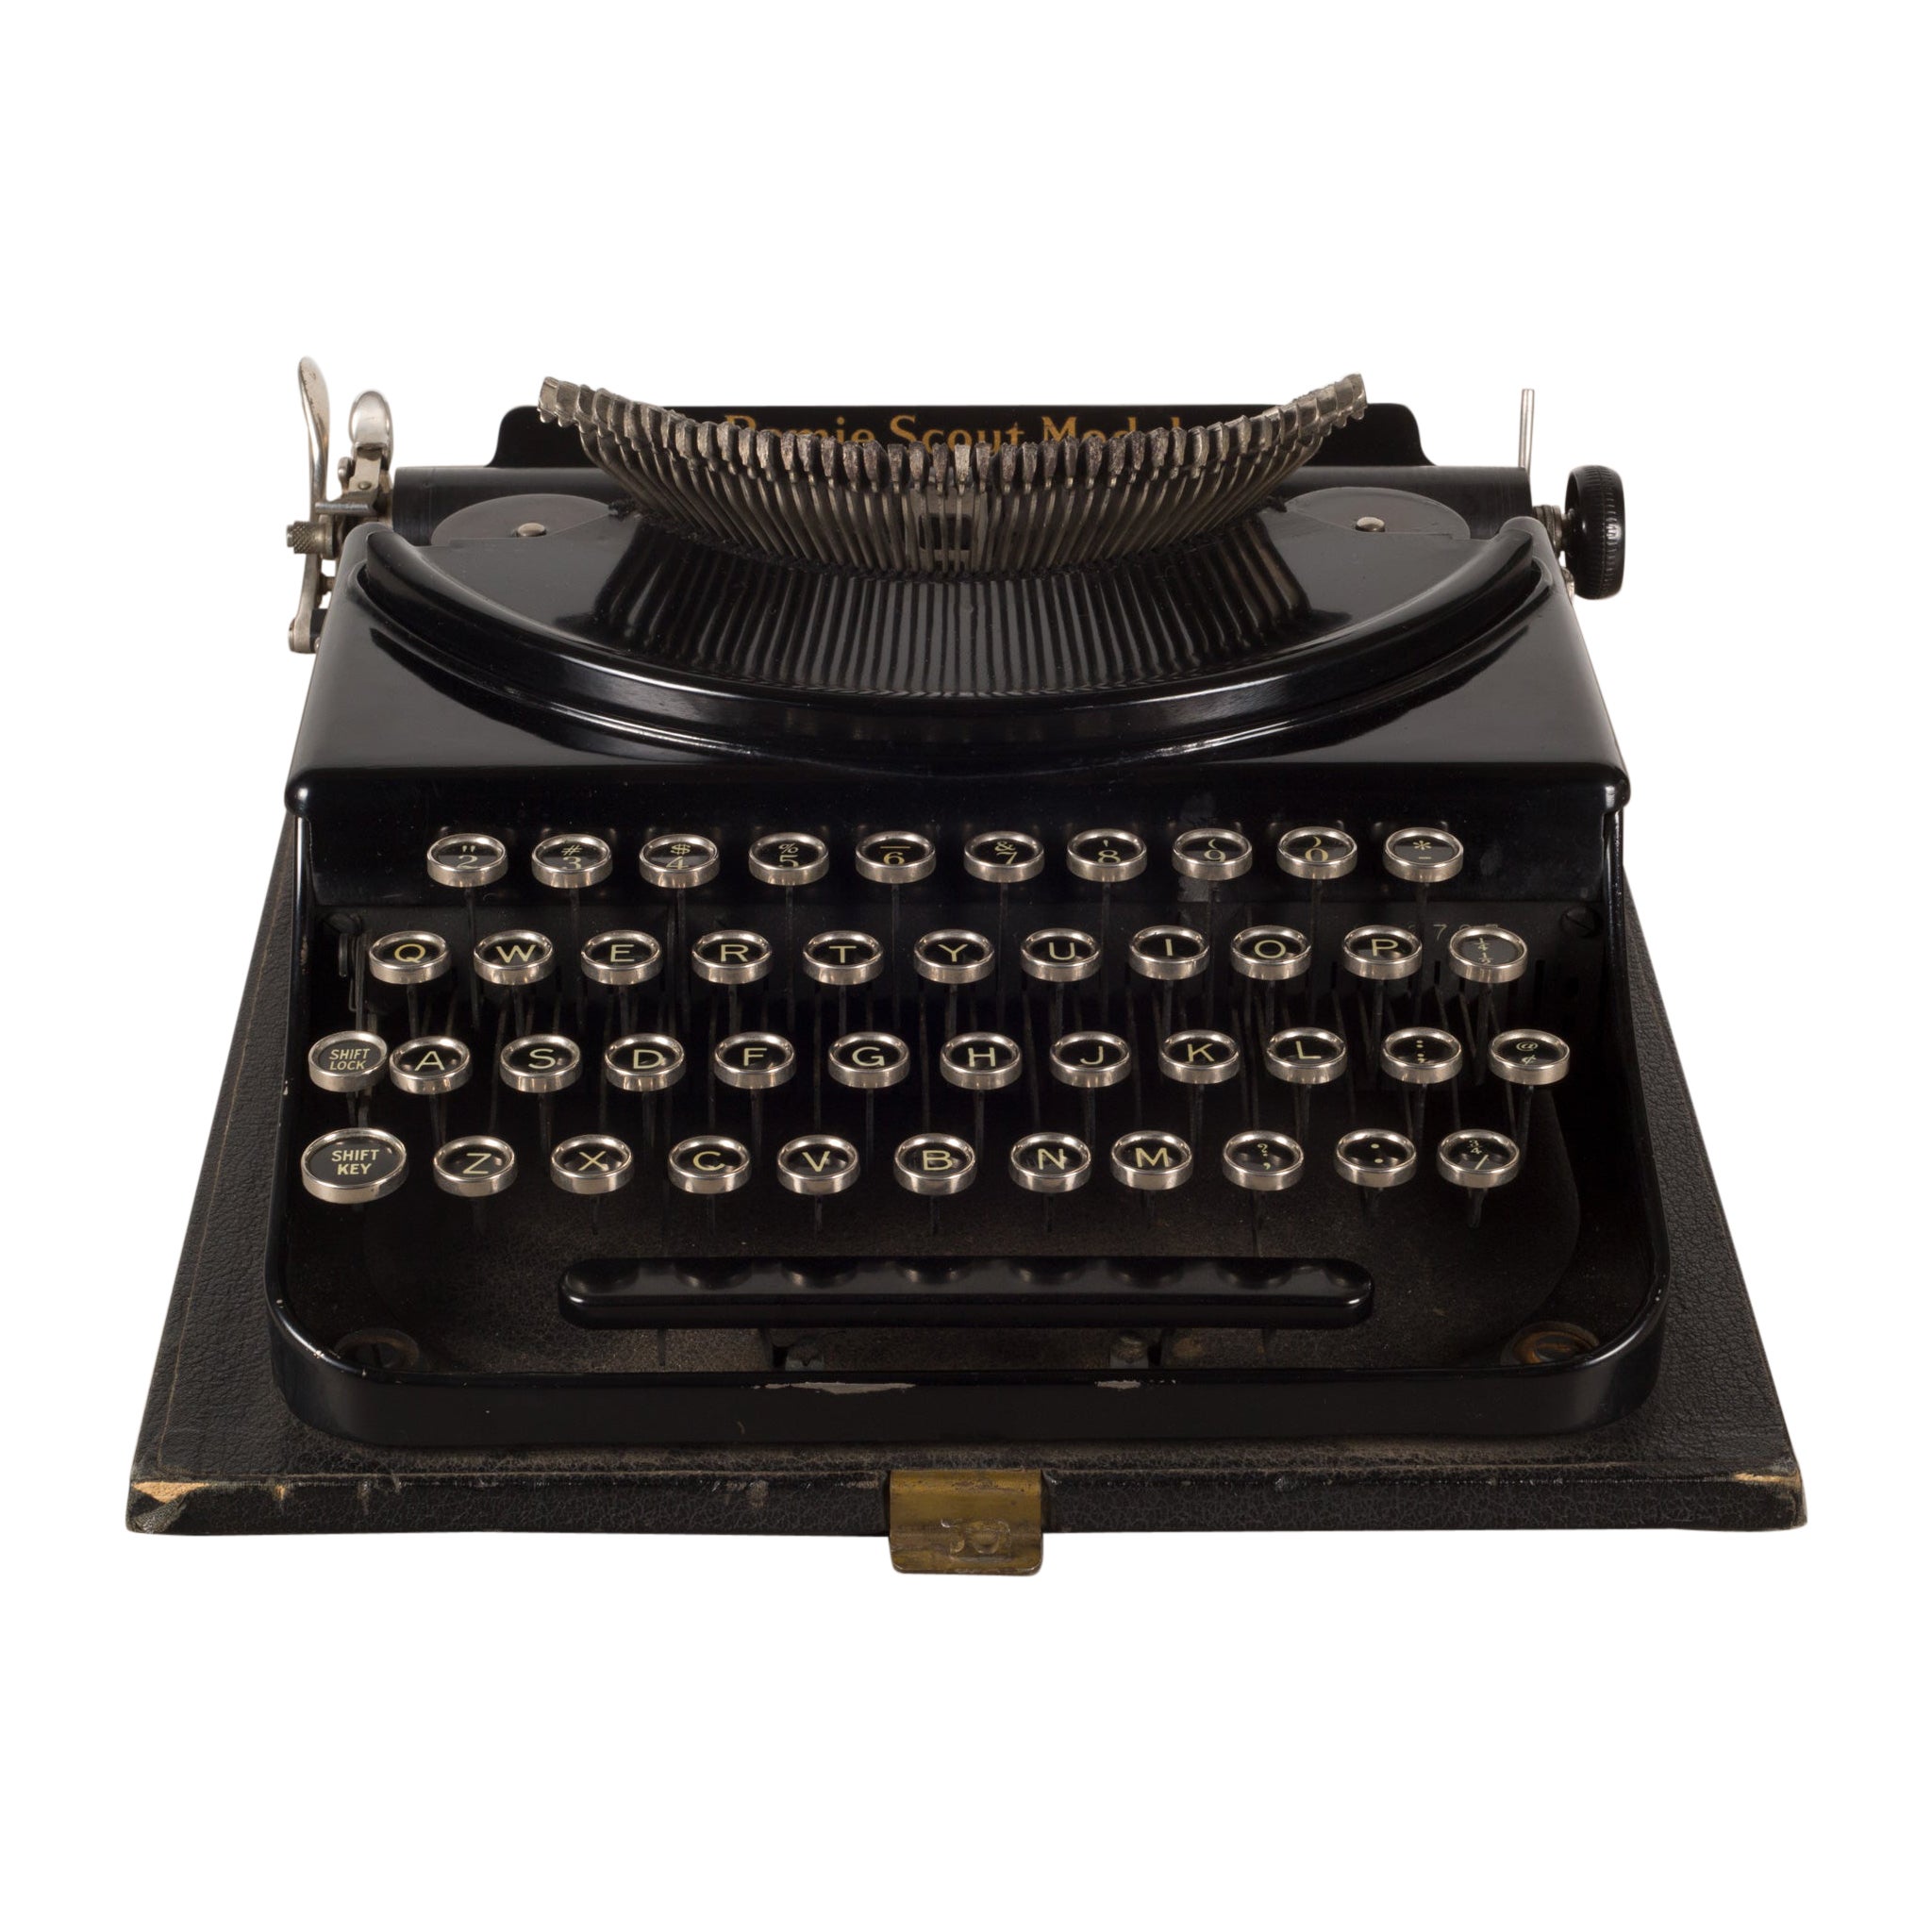 Antique Refurbished Portable Remie Scout Model Typewriter, C.1939